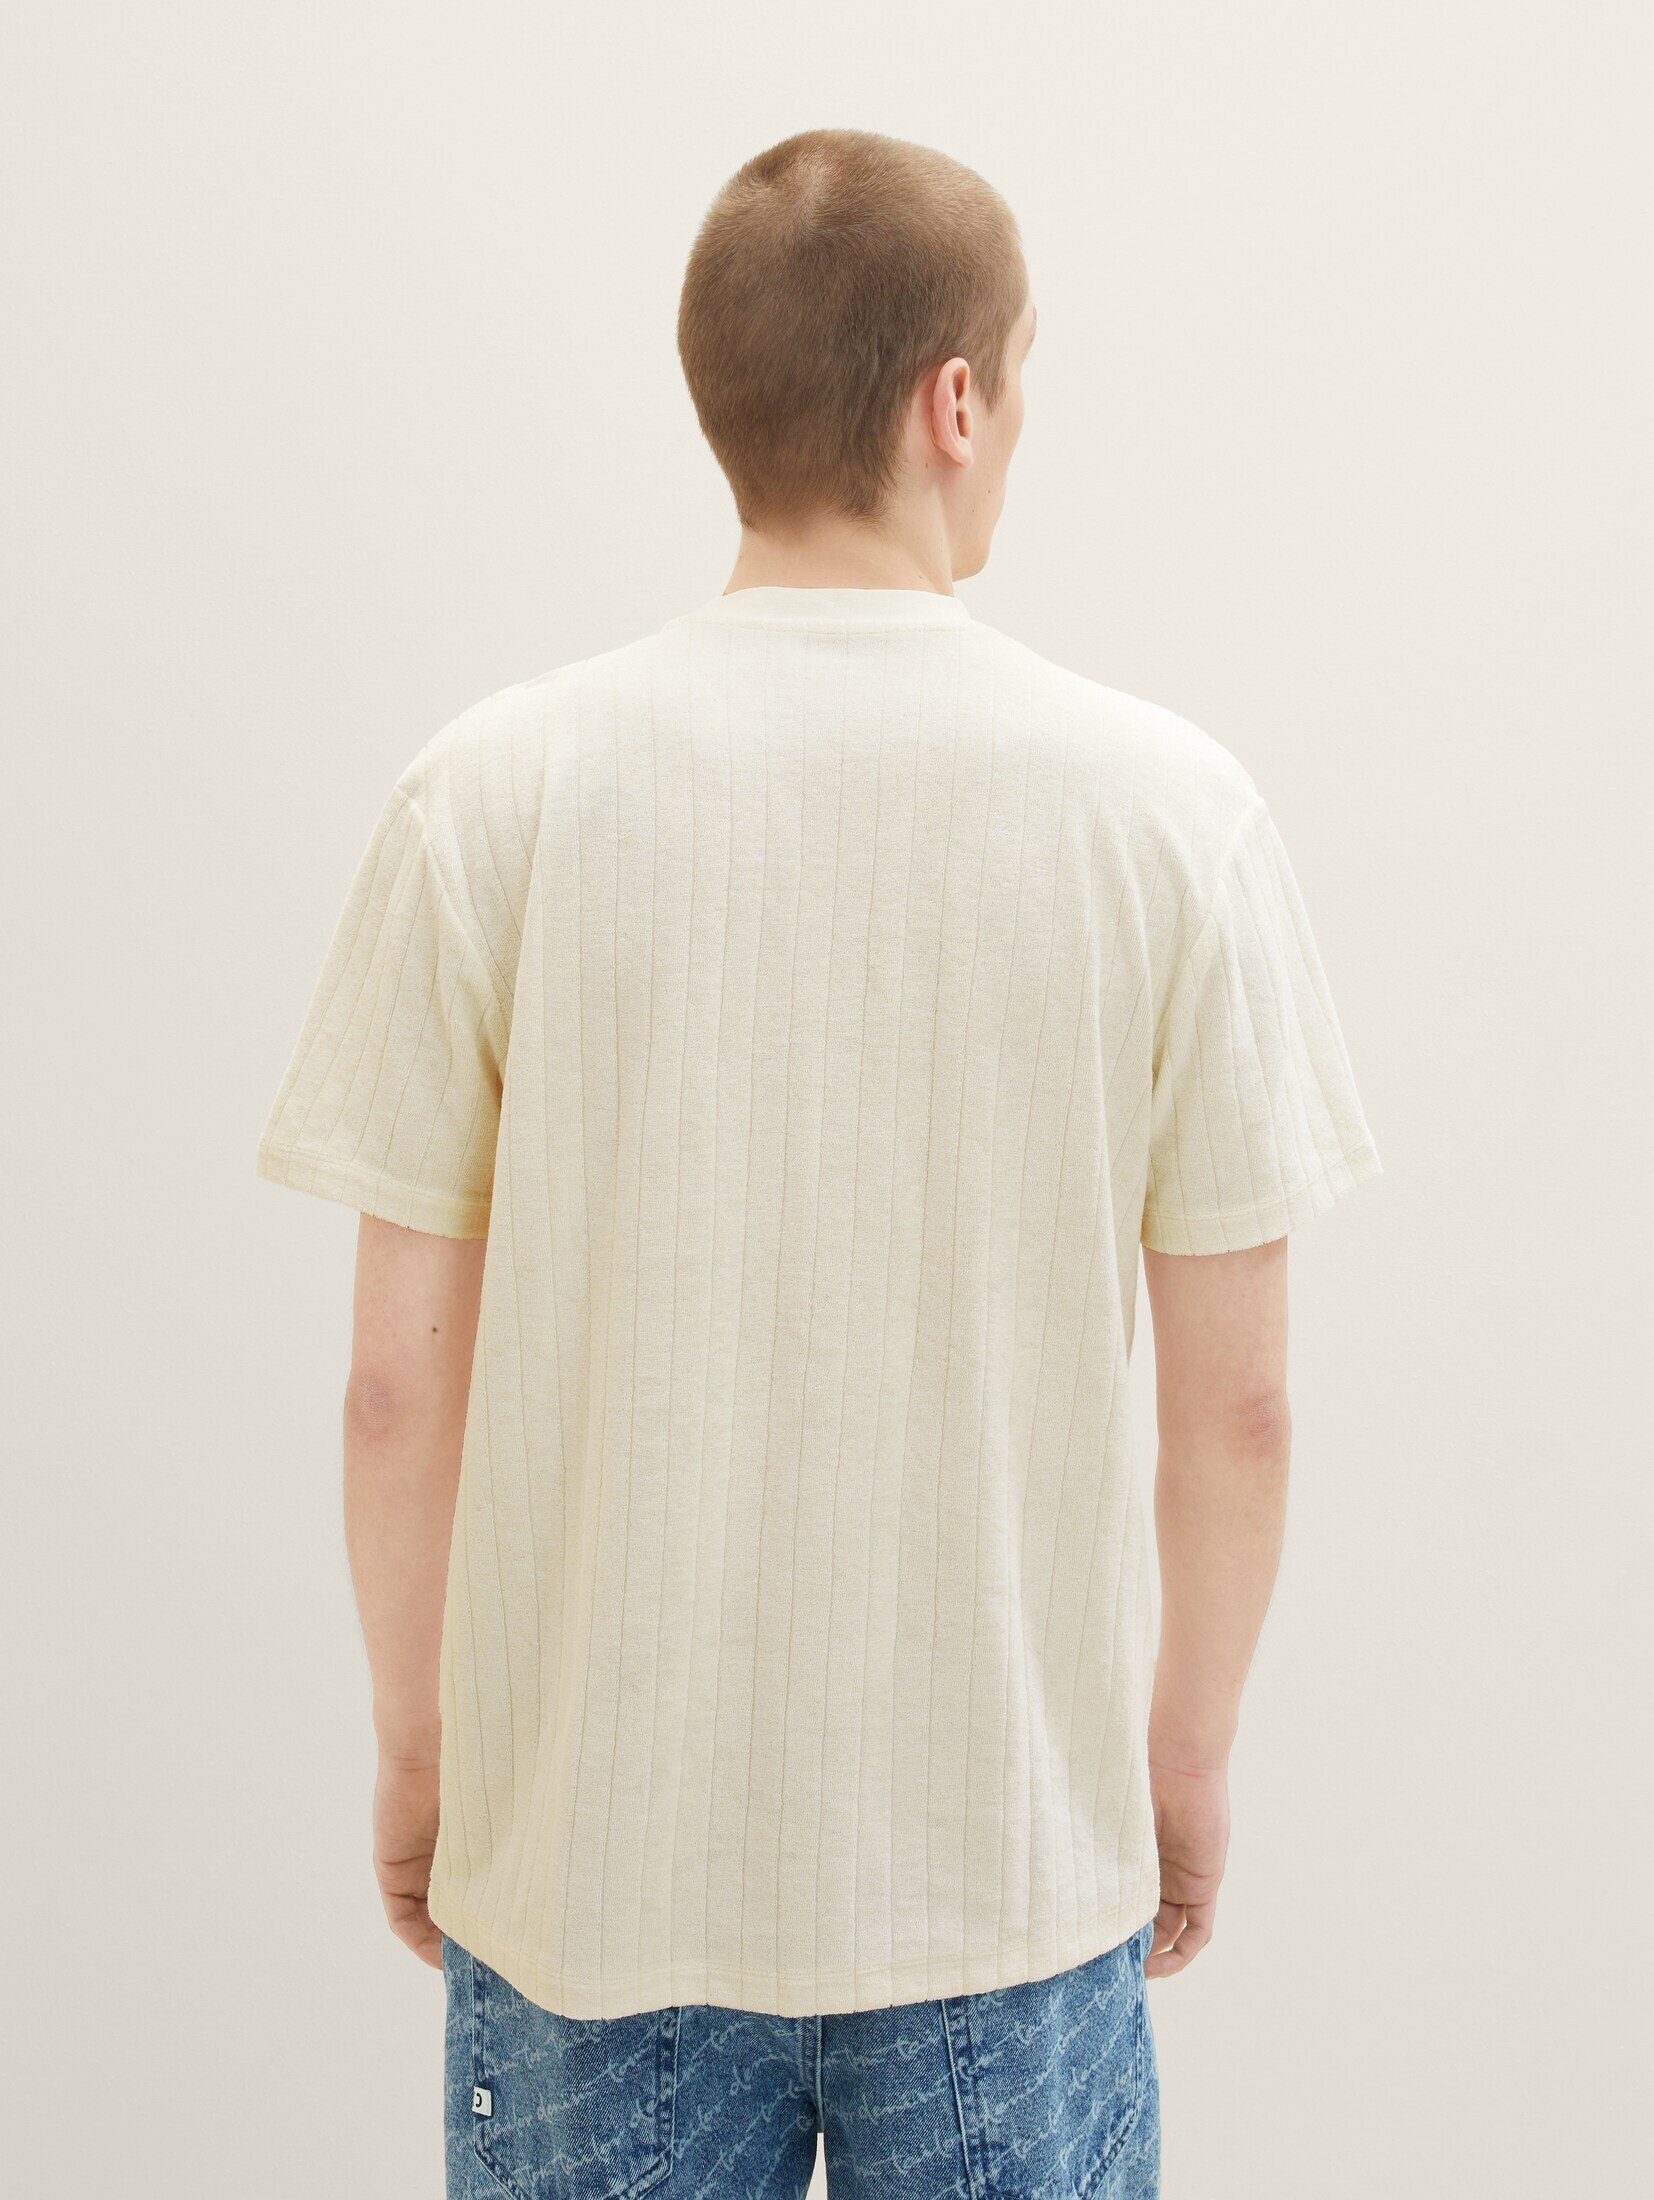 TOM TAILOR Denim T-Shirt Basic aus towelling Frottee T-Shirt jacquard stripe